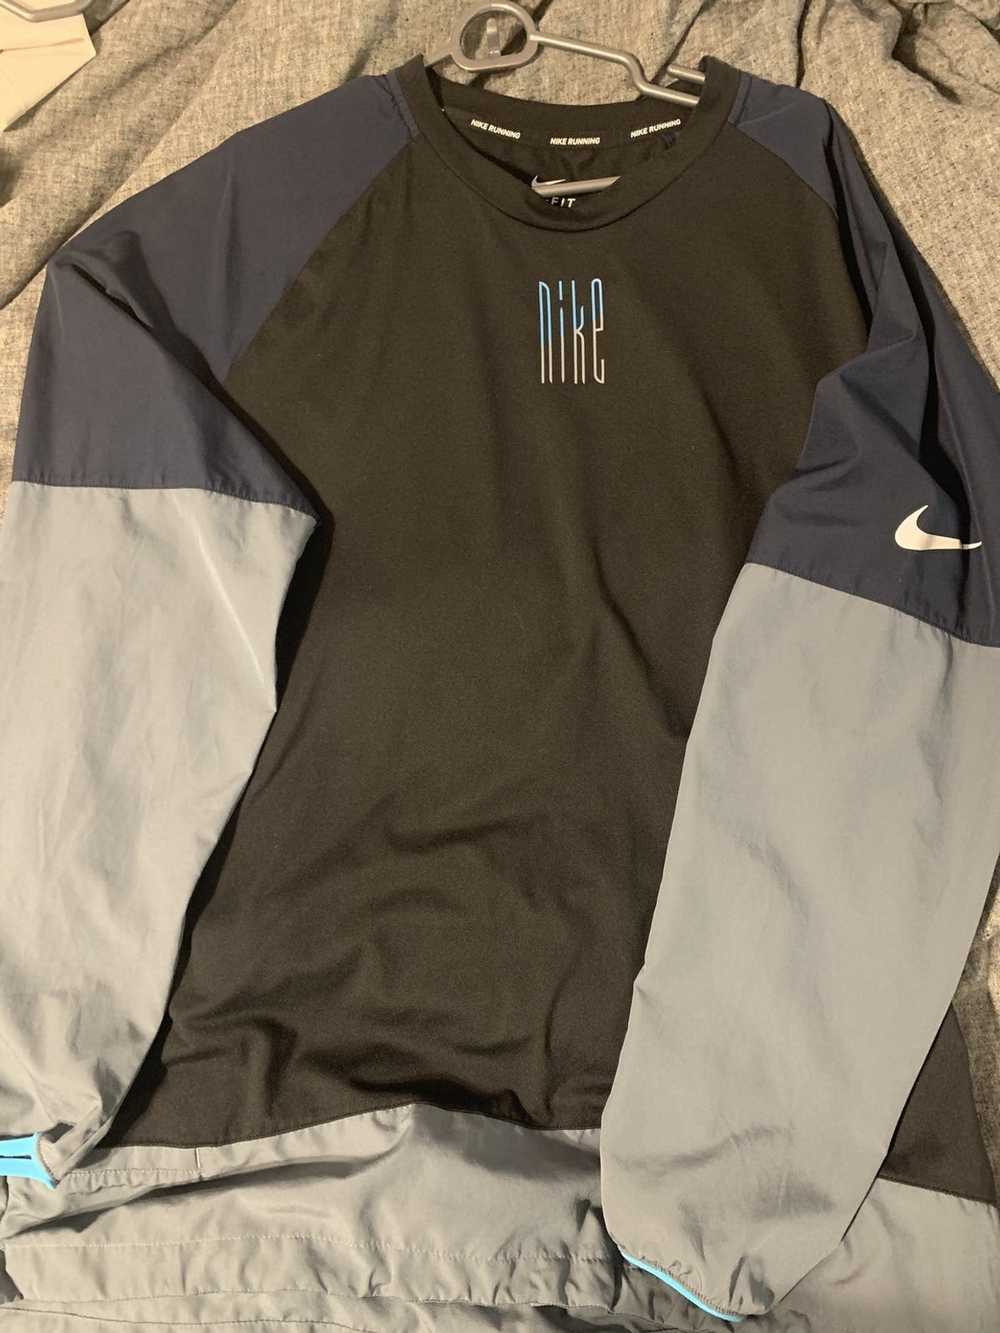 Nike Nike shirt - image 1